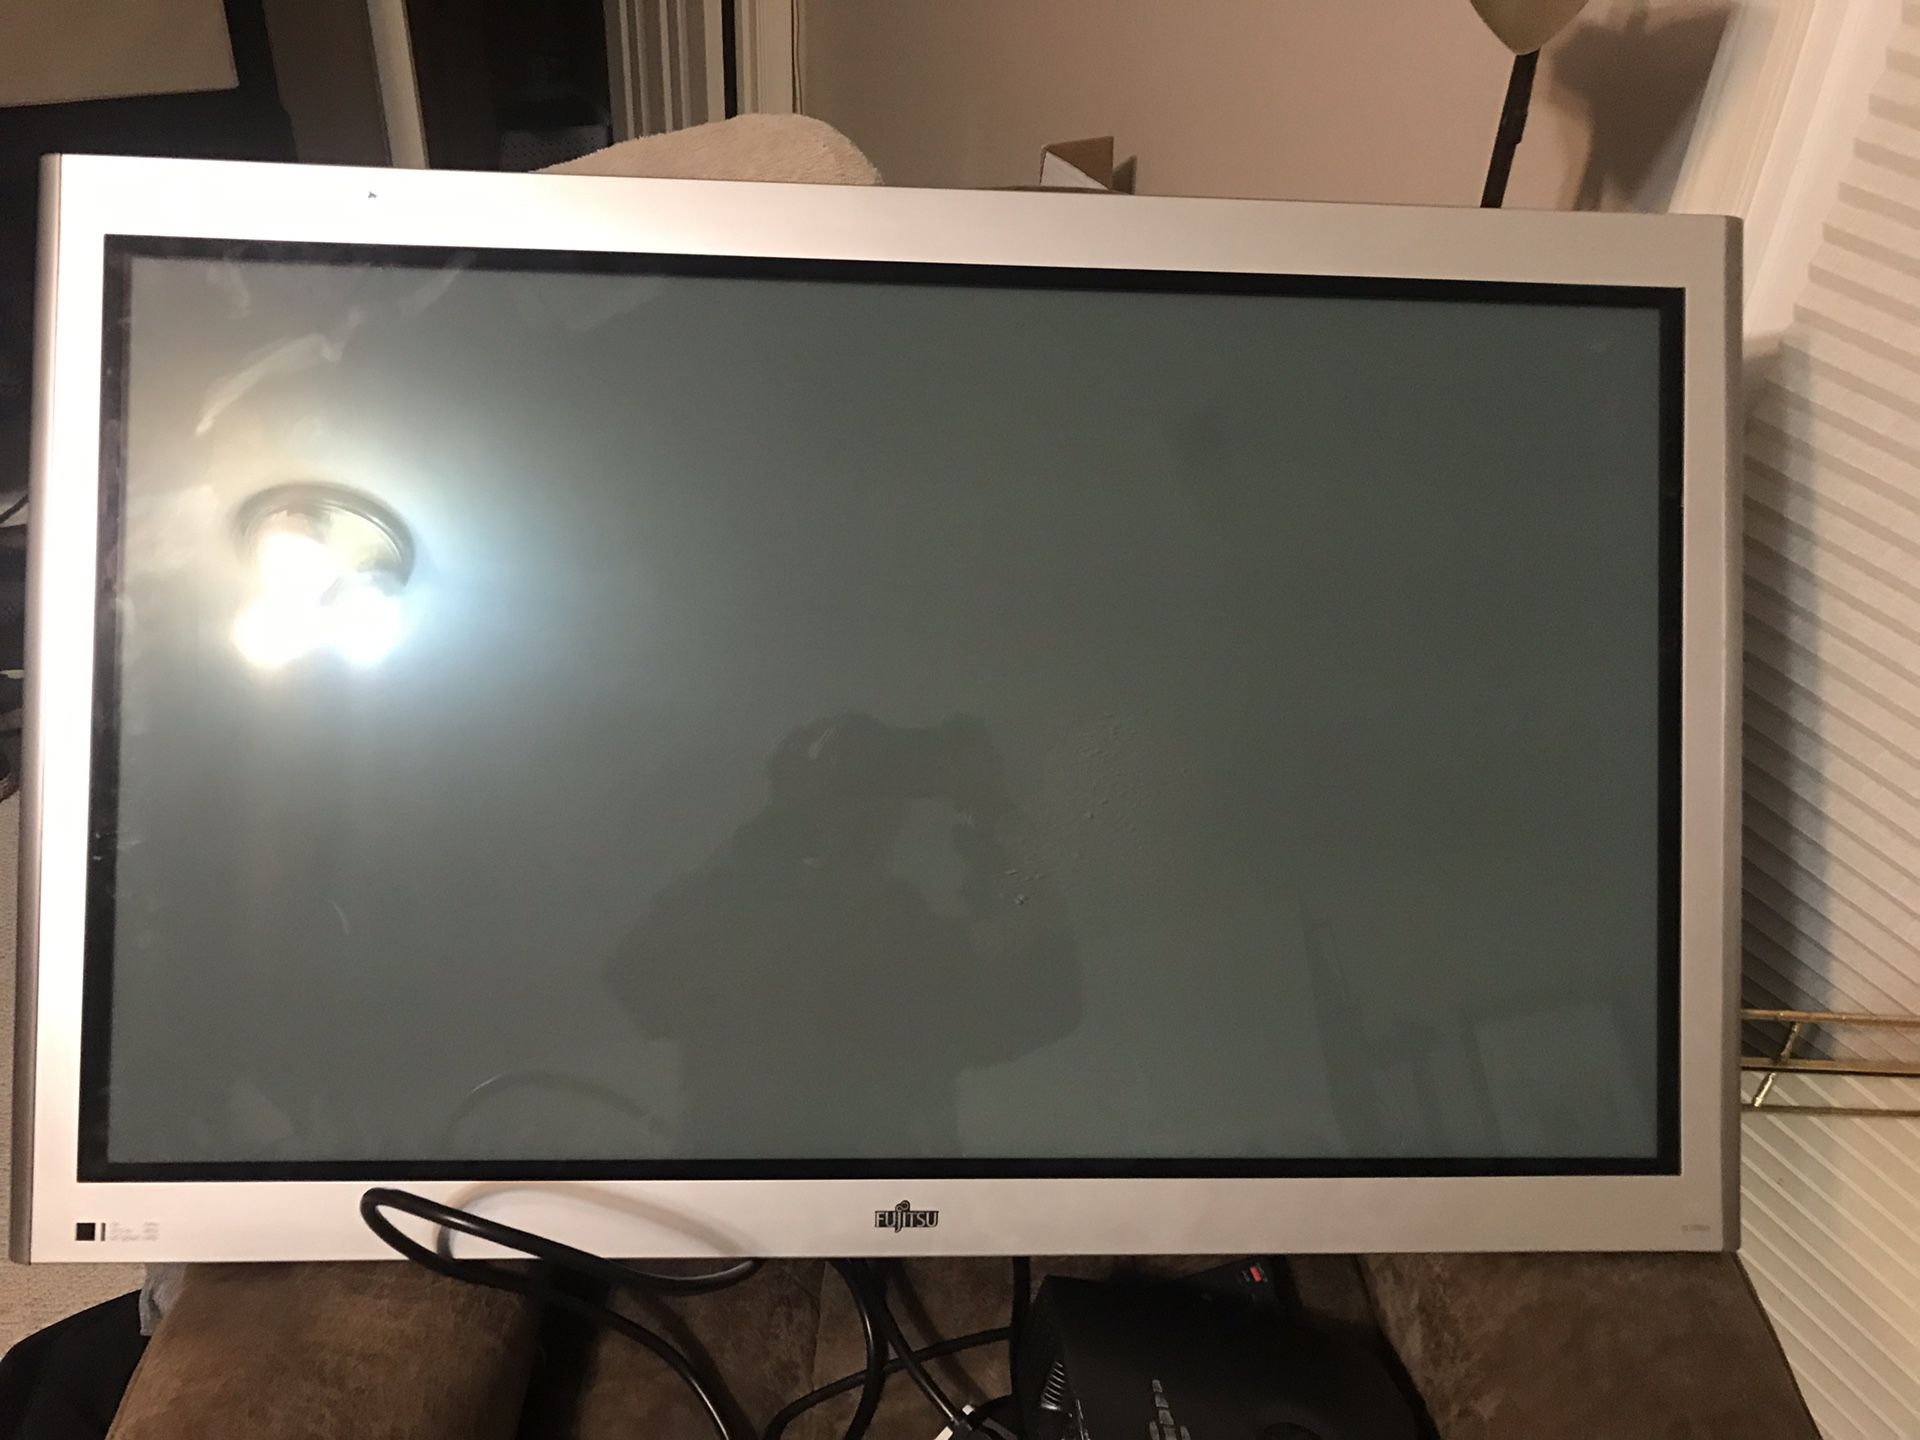 Fujitsu plasma screen tv 42 inch